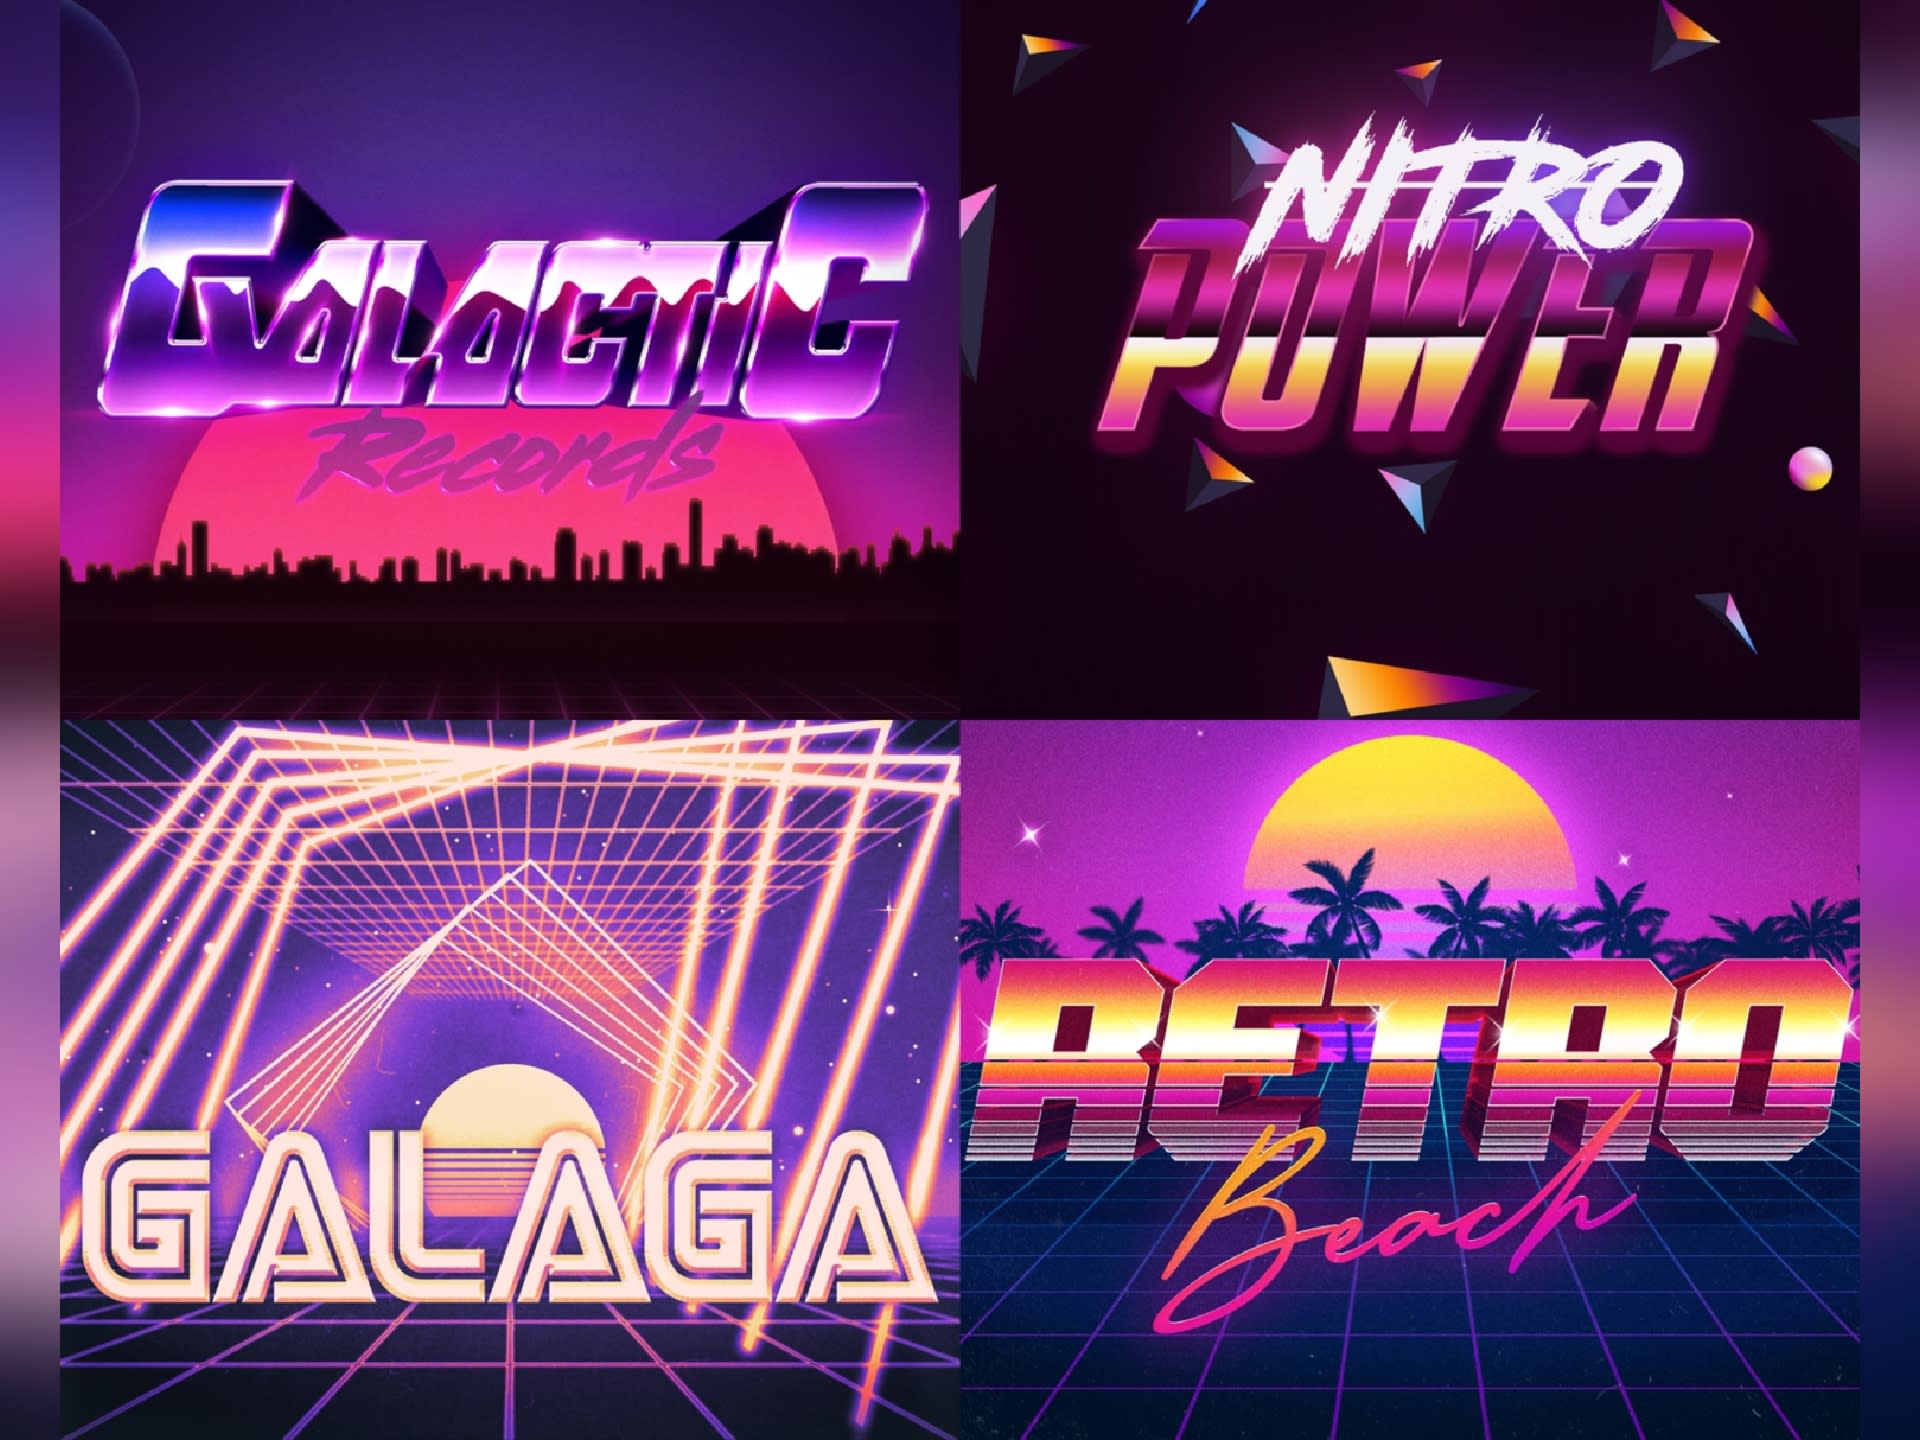 Make 80s 90s logo typography pop style design by Pop_artist22